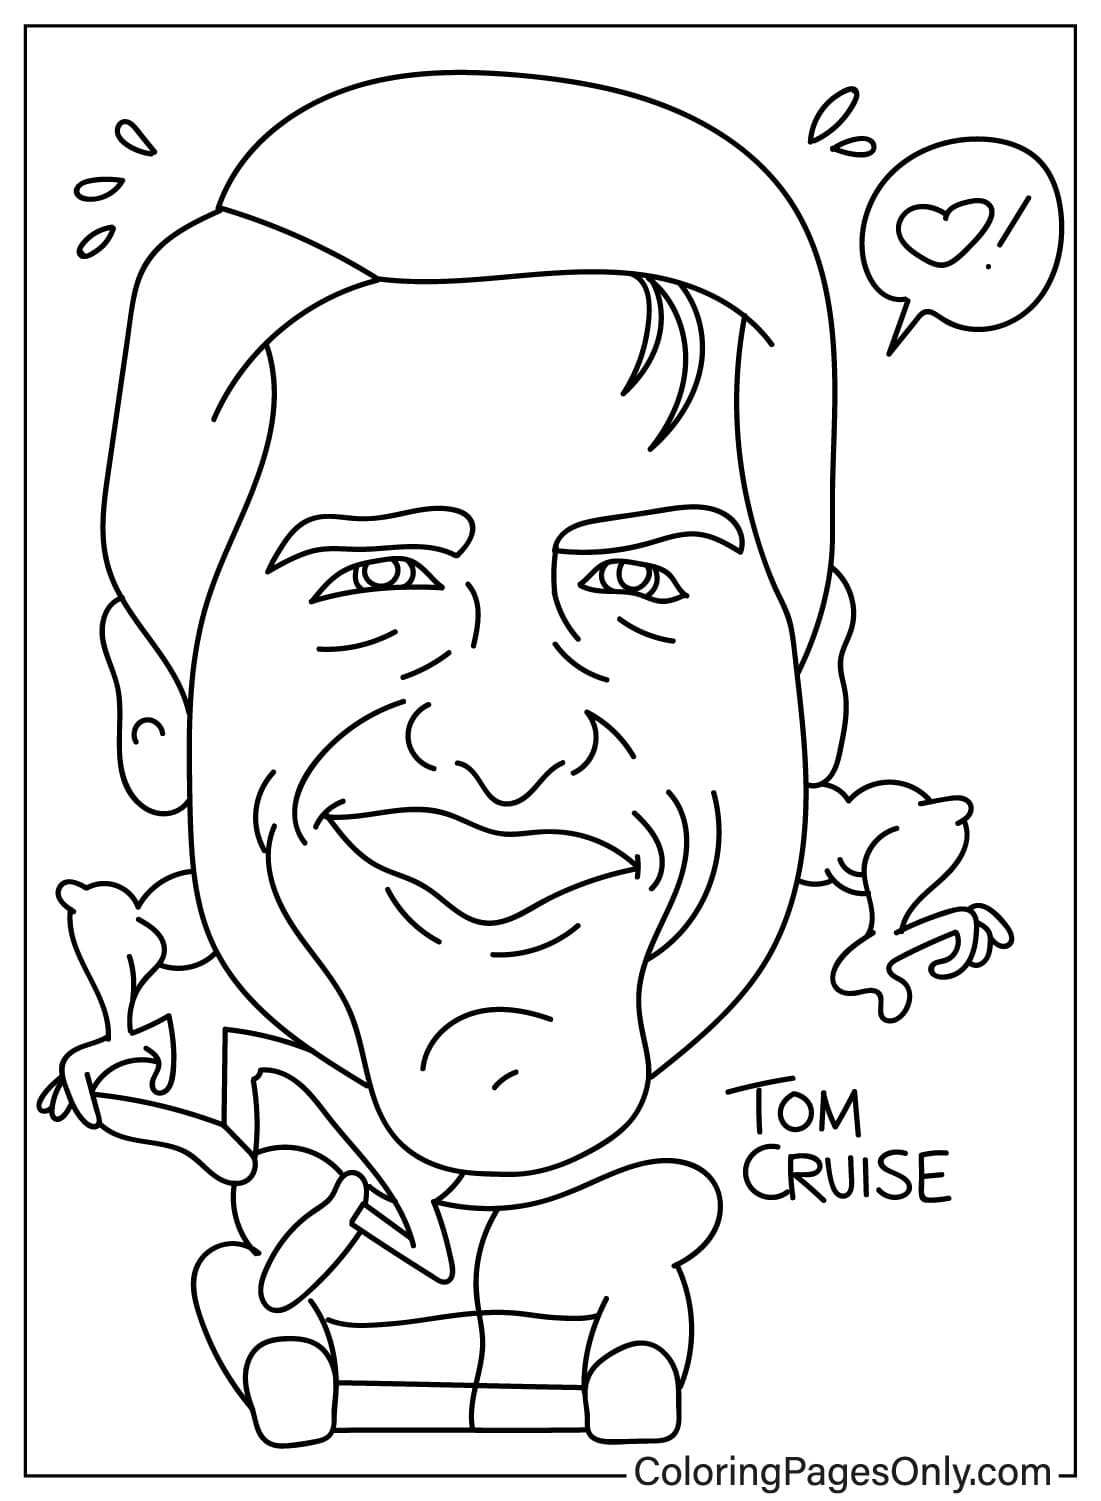 Dibujo para colorear Tom Cruise de Tom Cruise